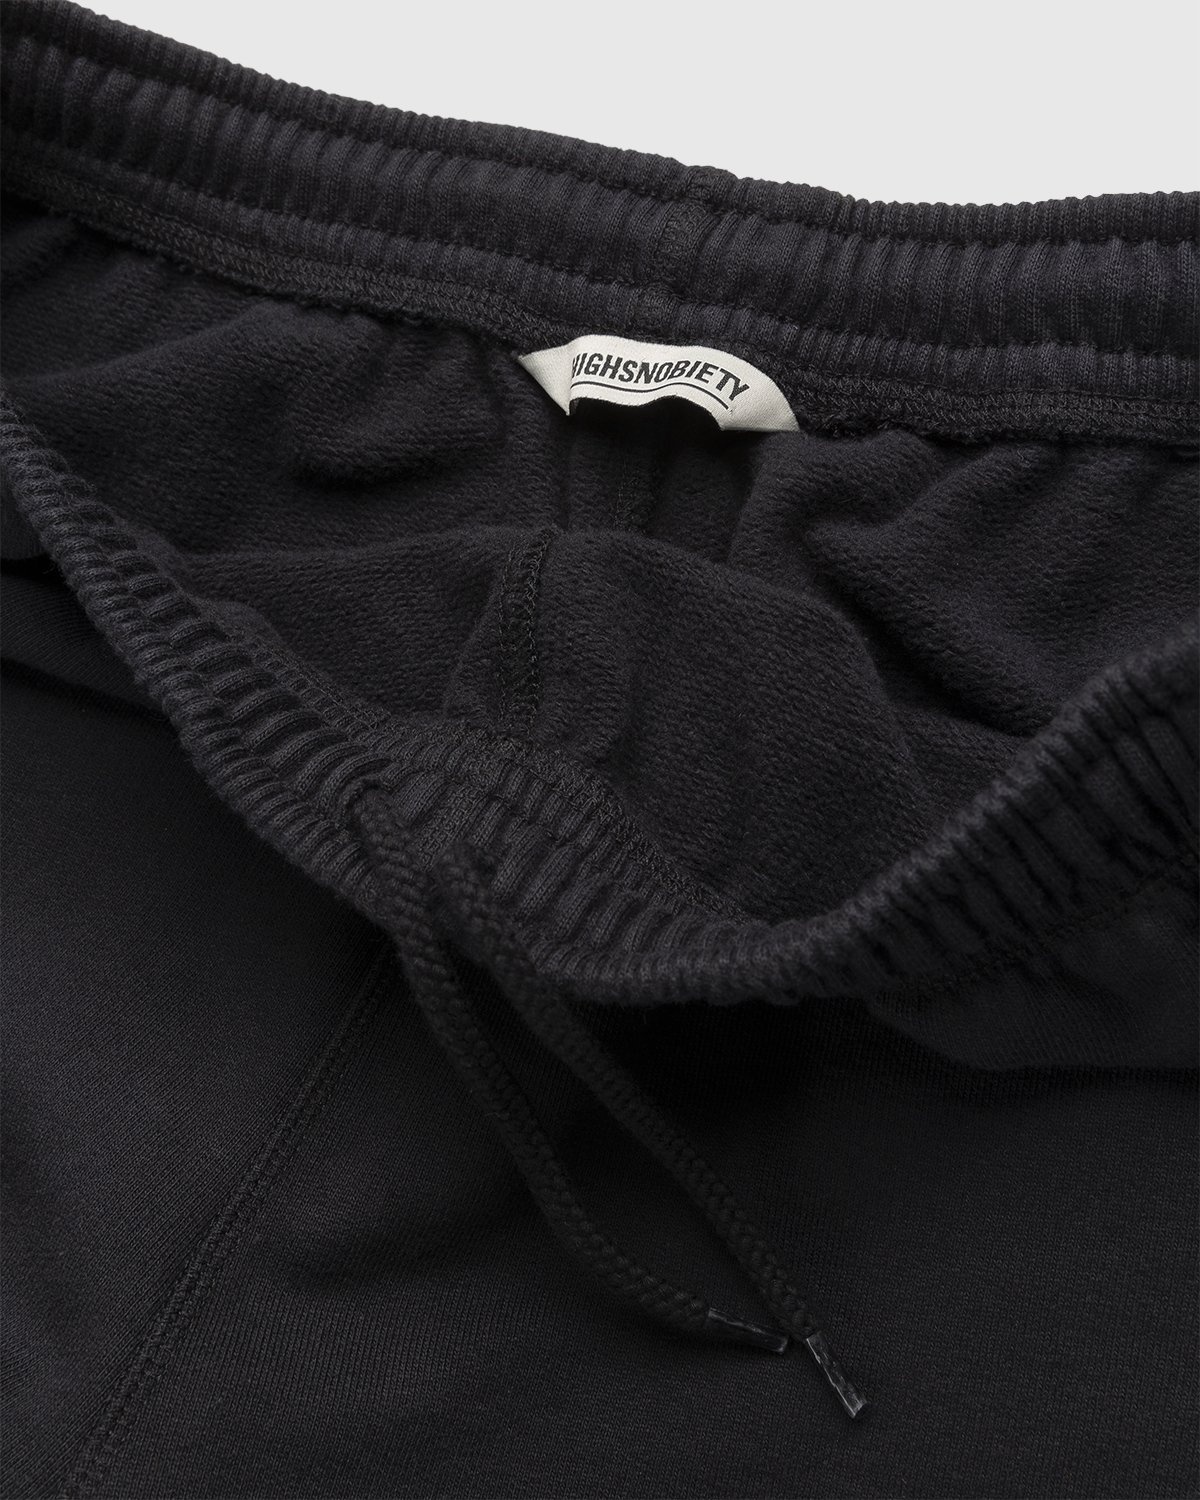 Highsnobiety – Logo Fleece Staples Pants Black - Sweatpants - Black - Image 5